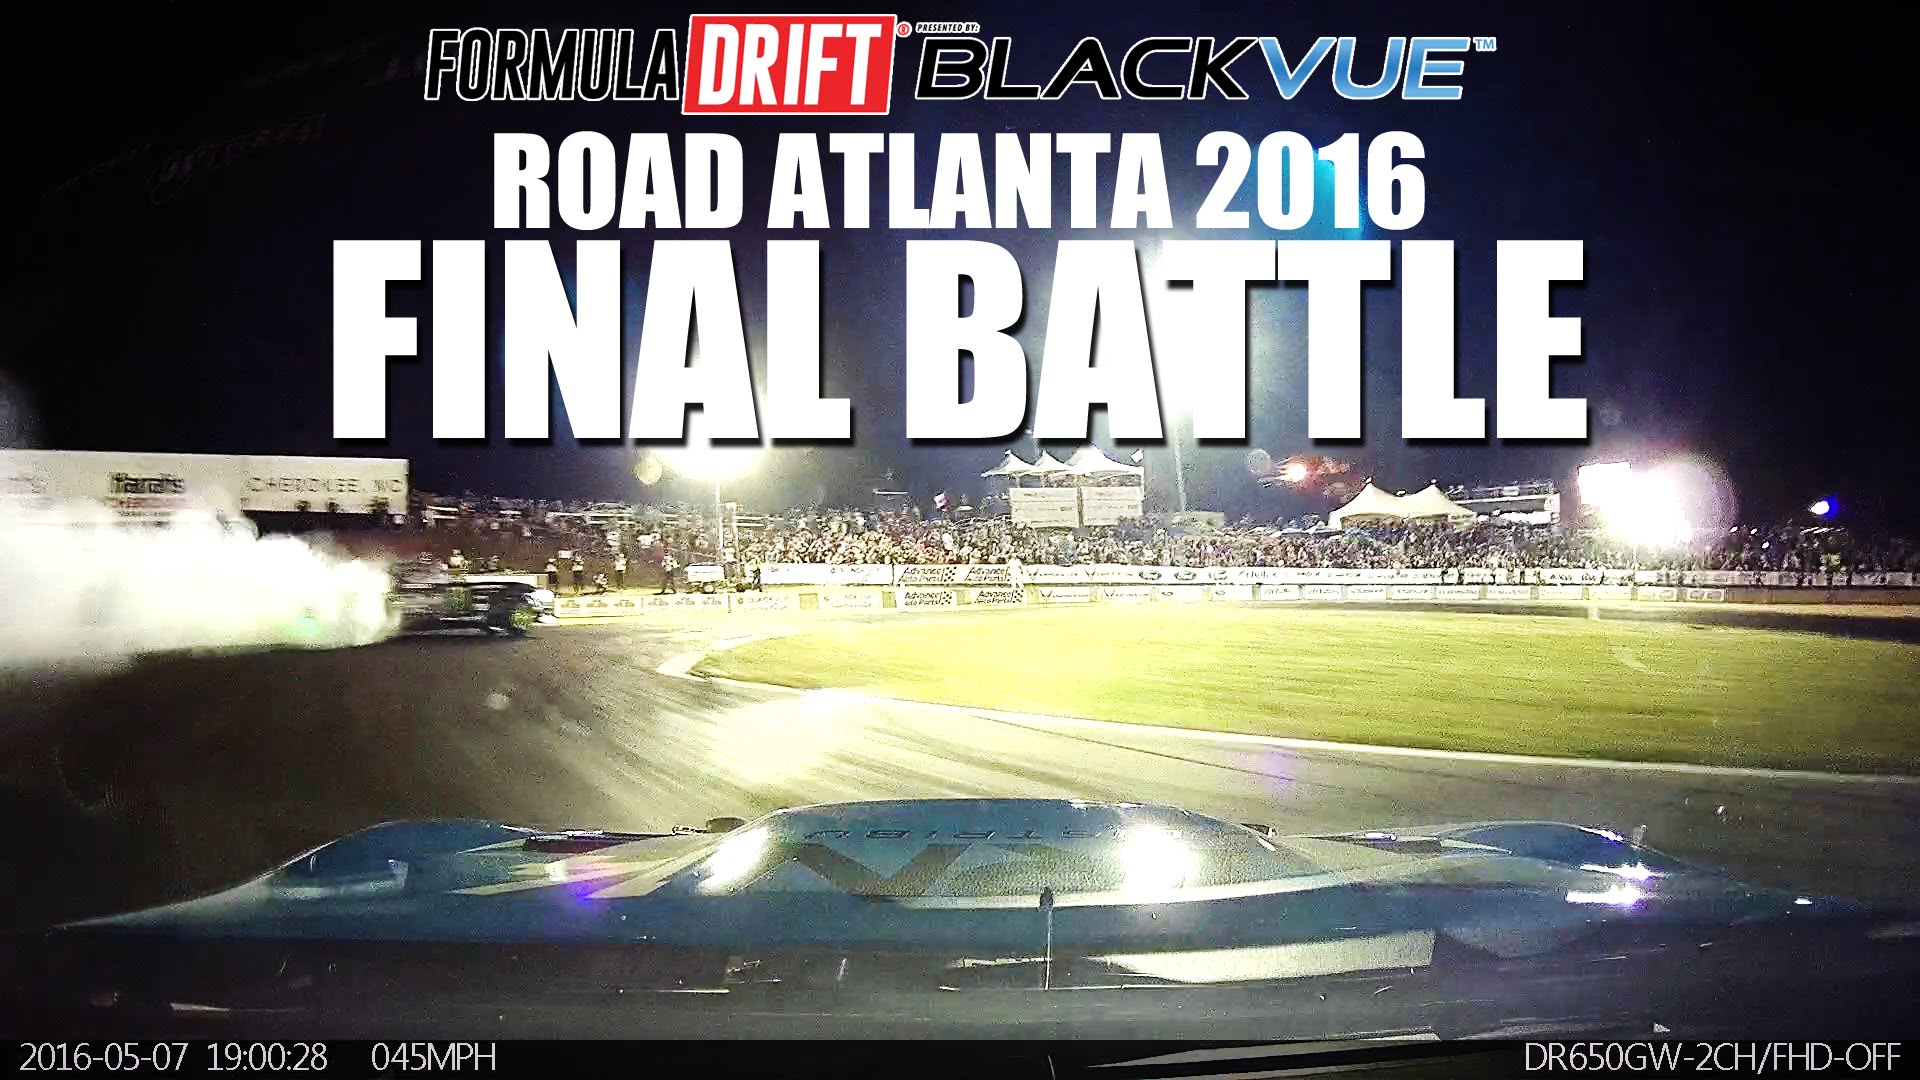 BLACKVUE x FORMULA DRIFT: Road Atlanta Final Battle!